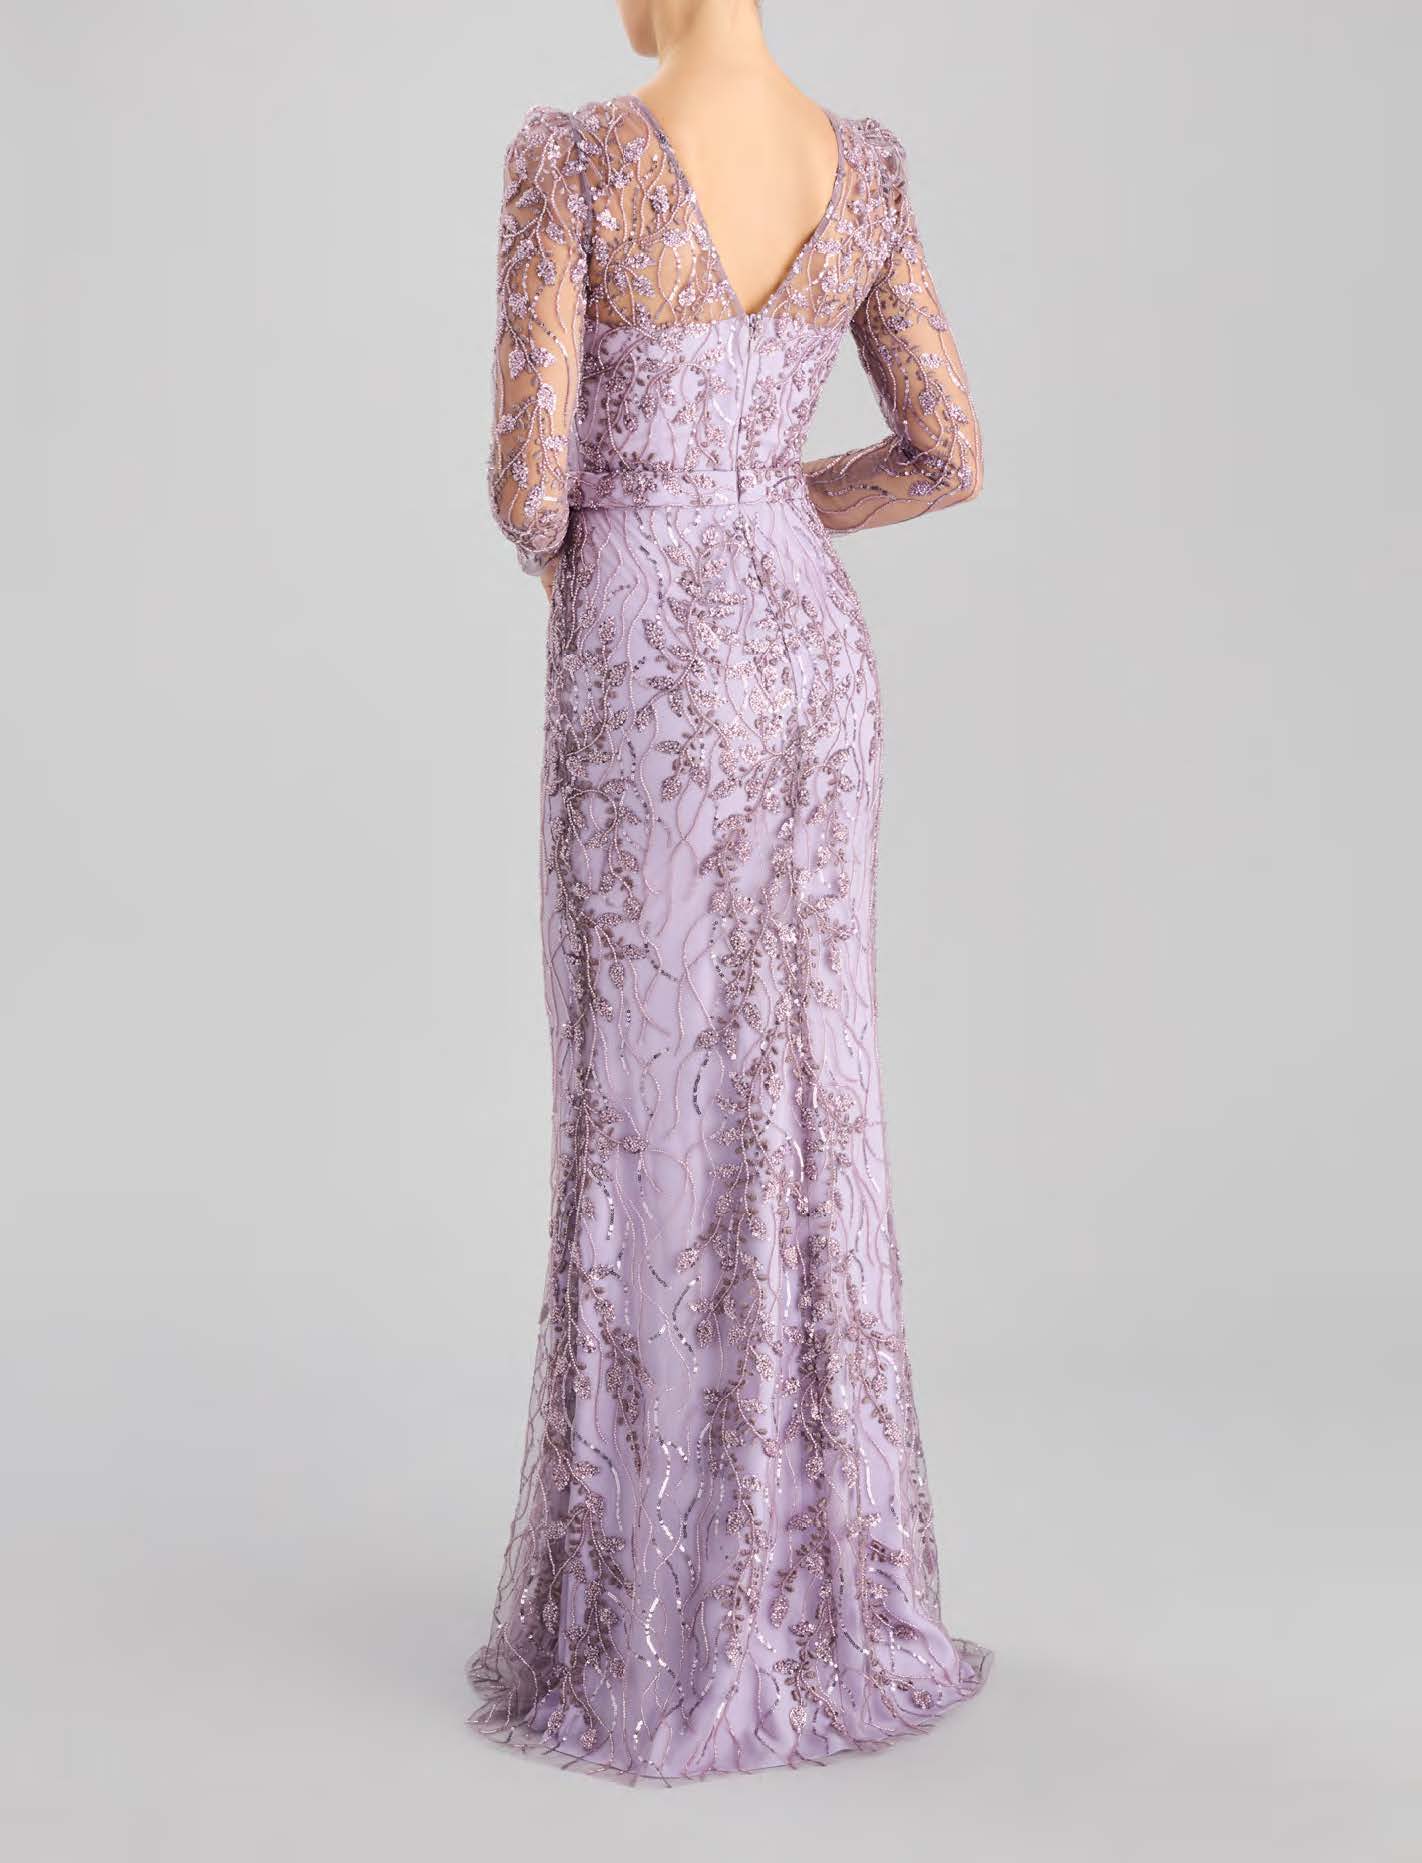 Full-Length Beaded Lace Dress with Bateau Neckline.JPG